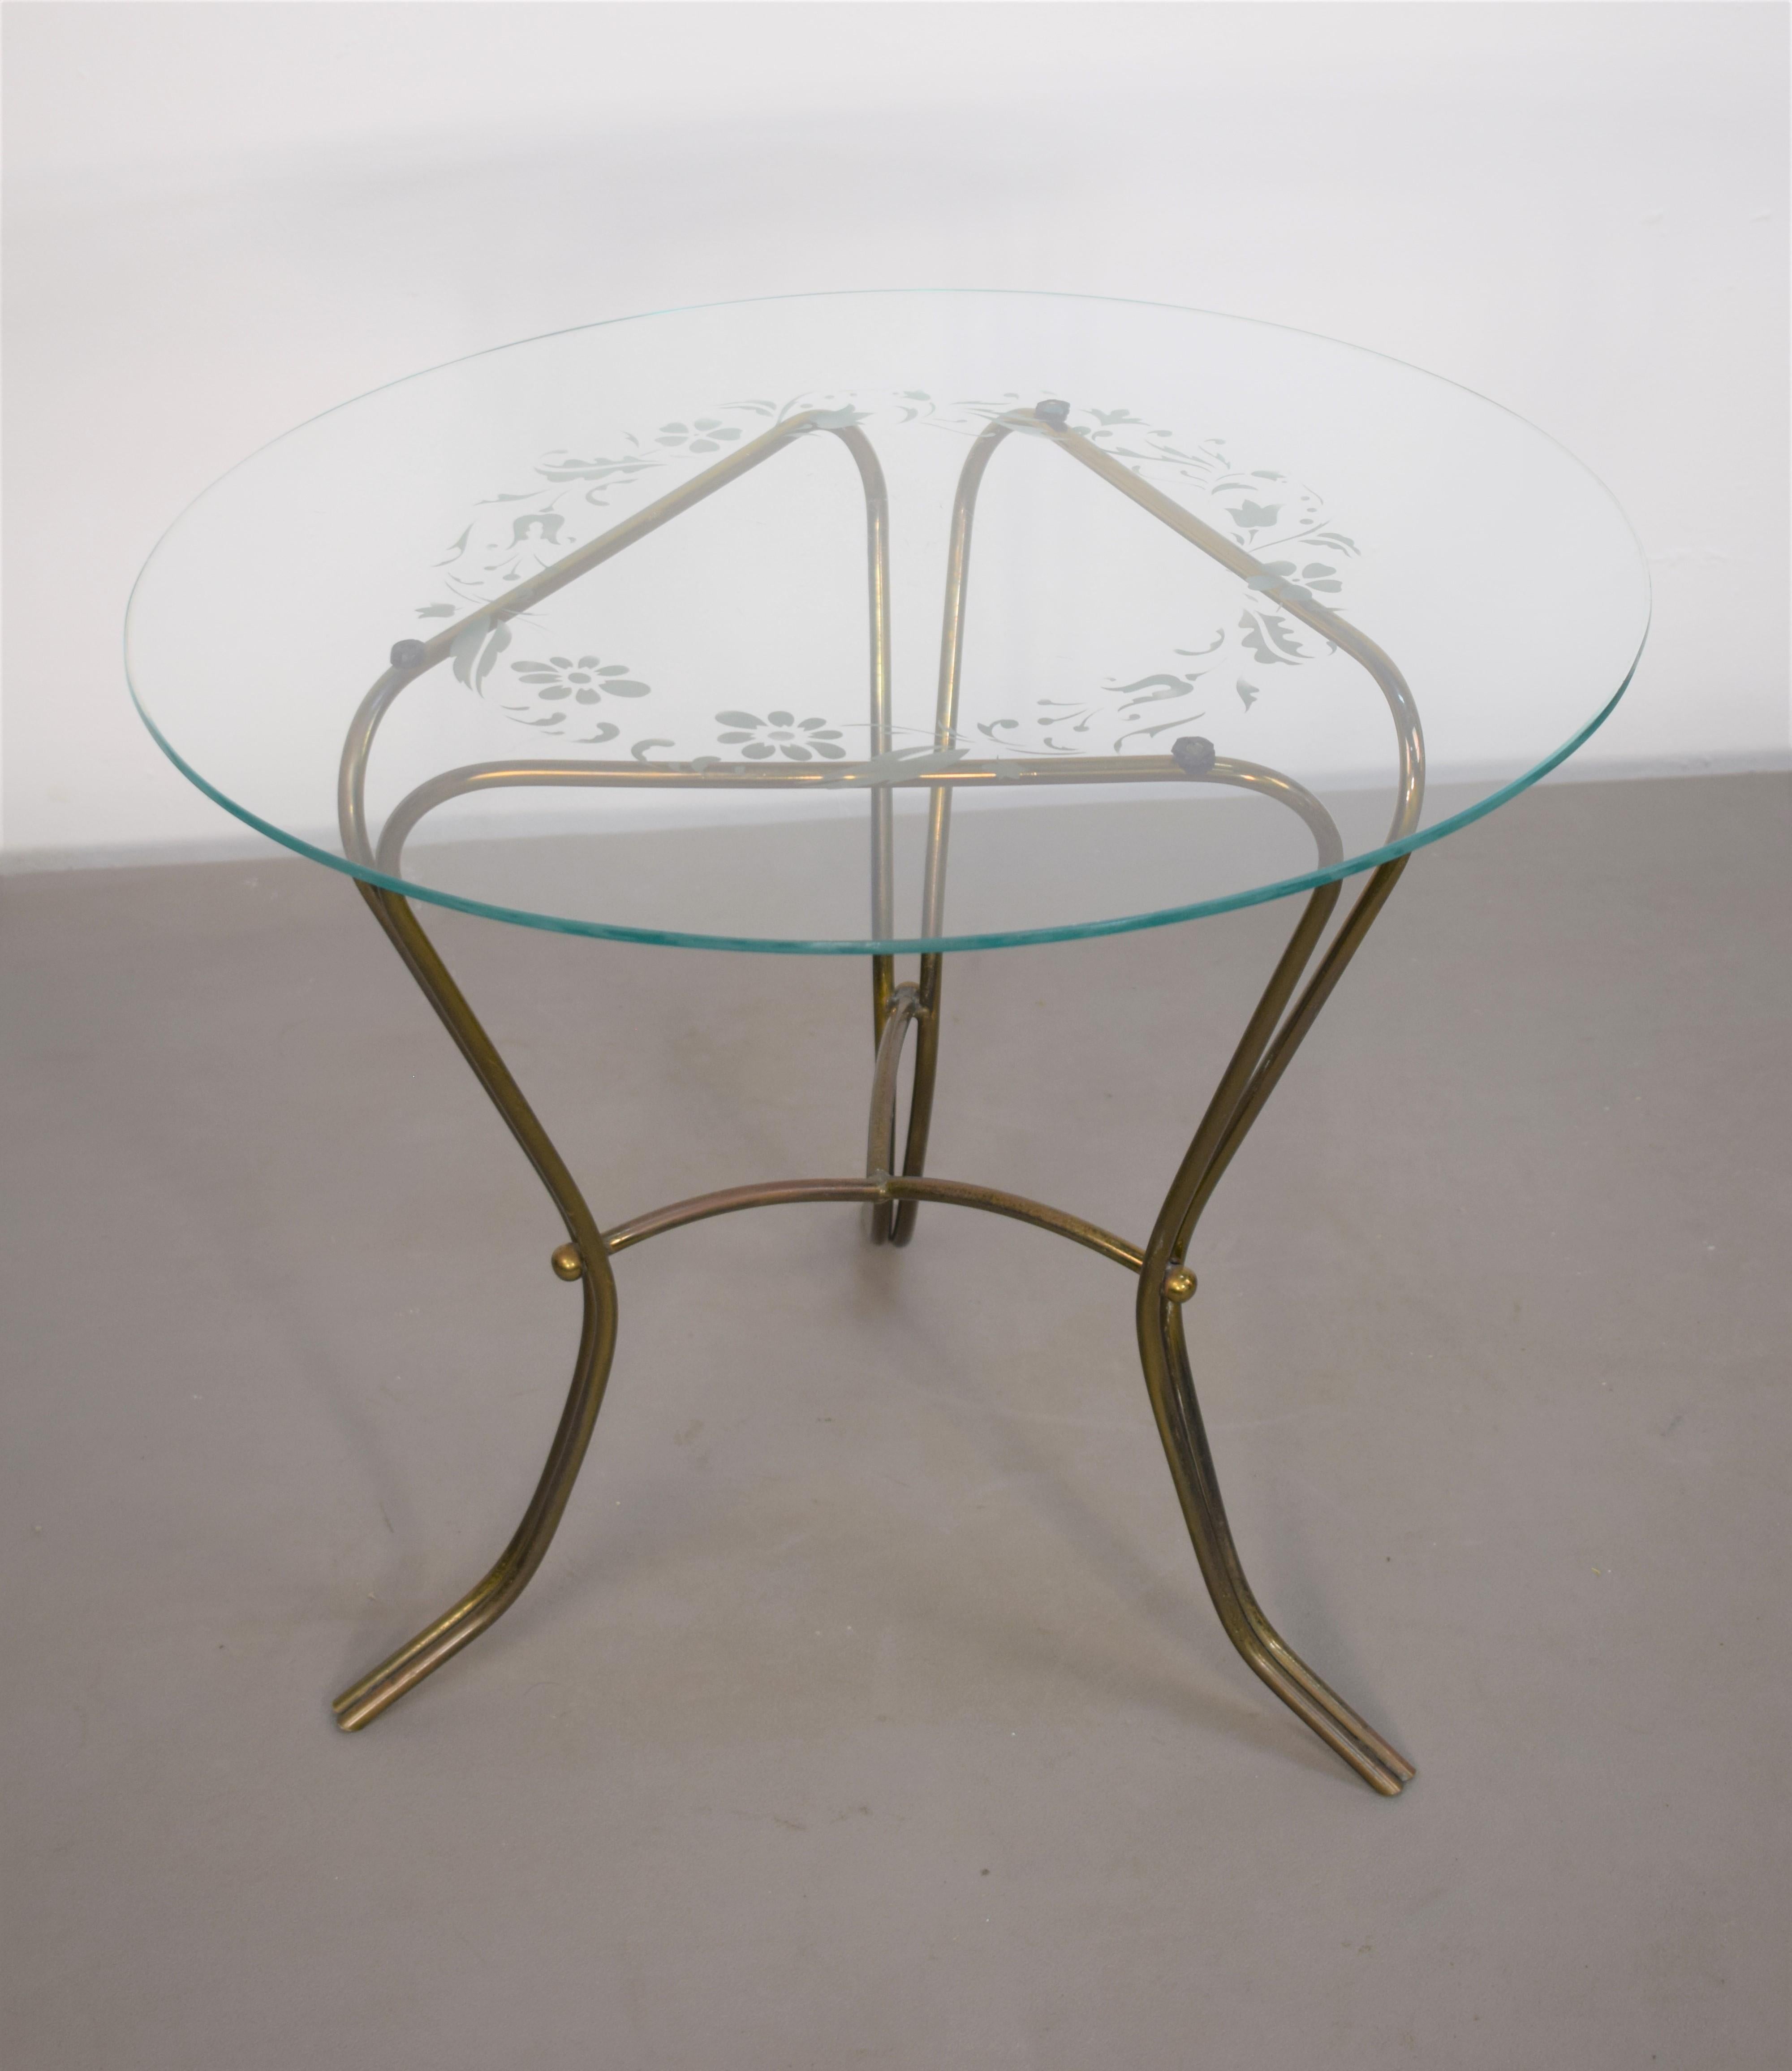 Italian round coffee table, 1950s.

Dimensions: H= 52 cm; D= 60 cm.